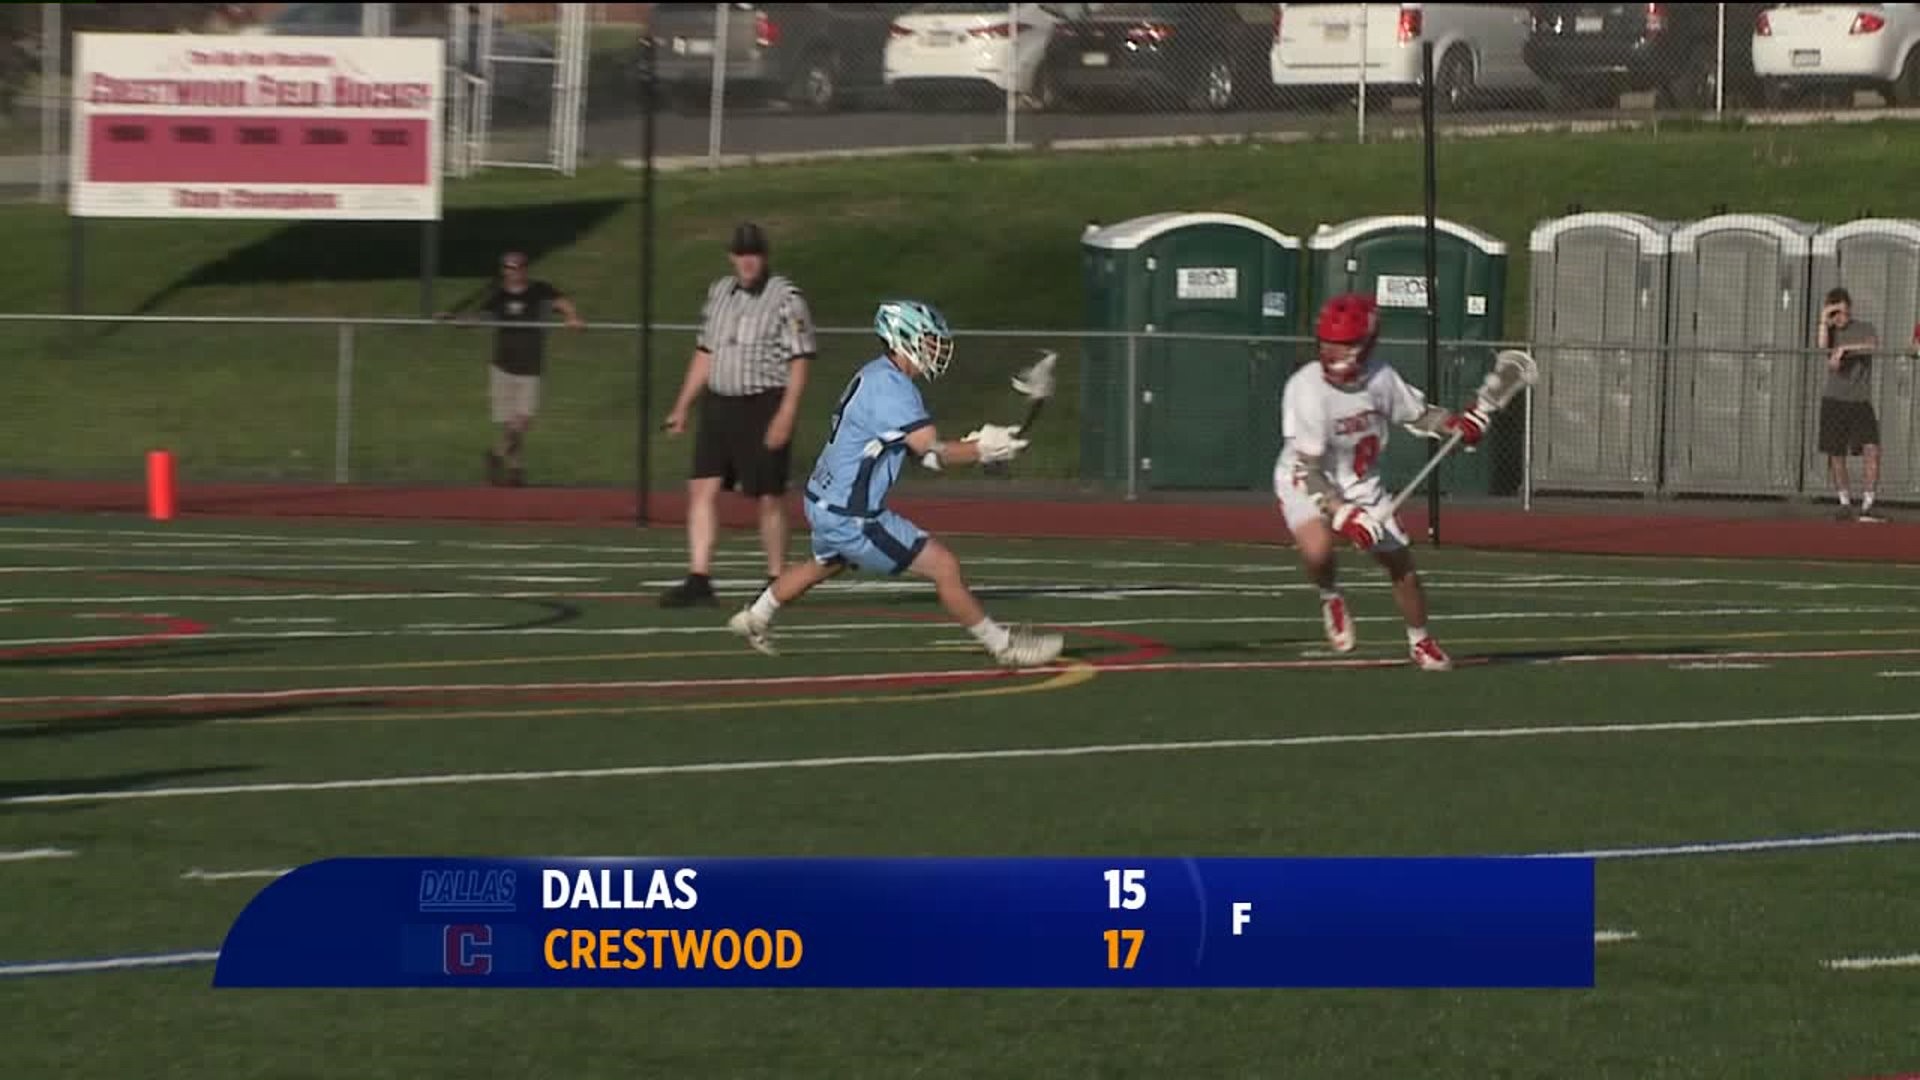 Dallas at Crestwood Lacrosse